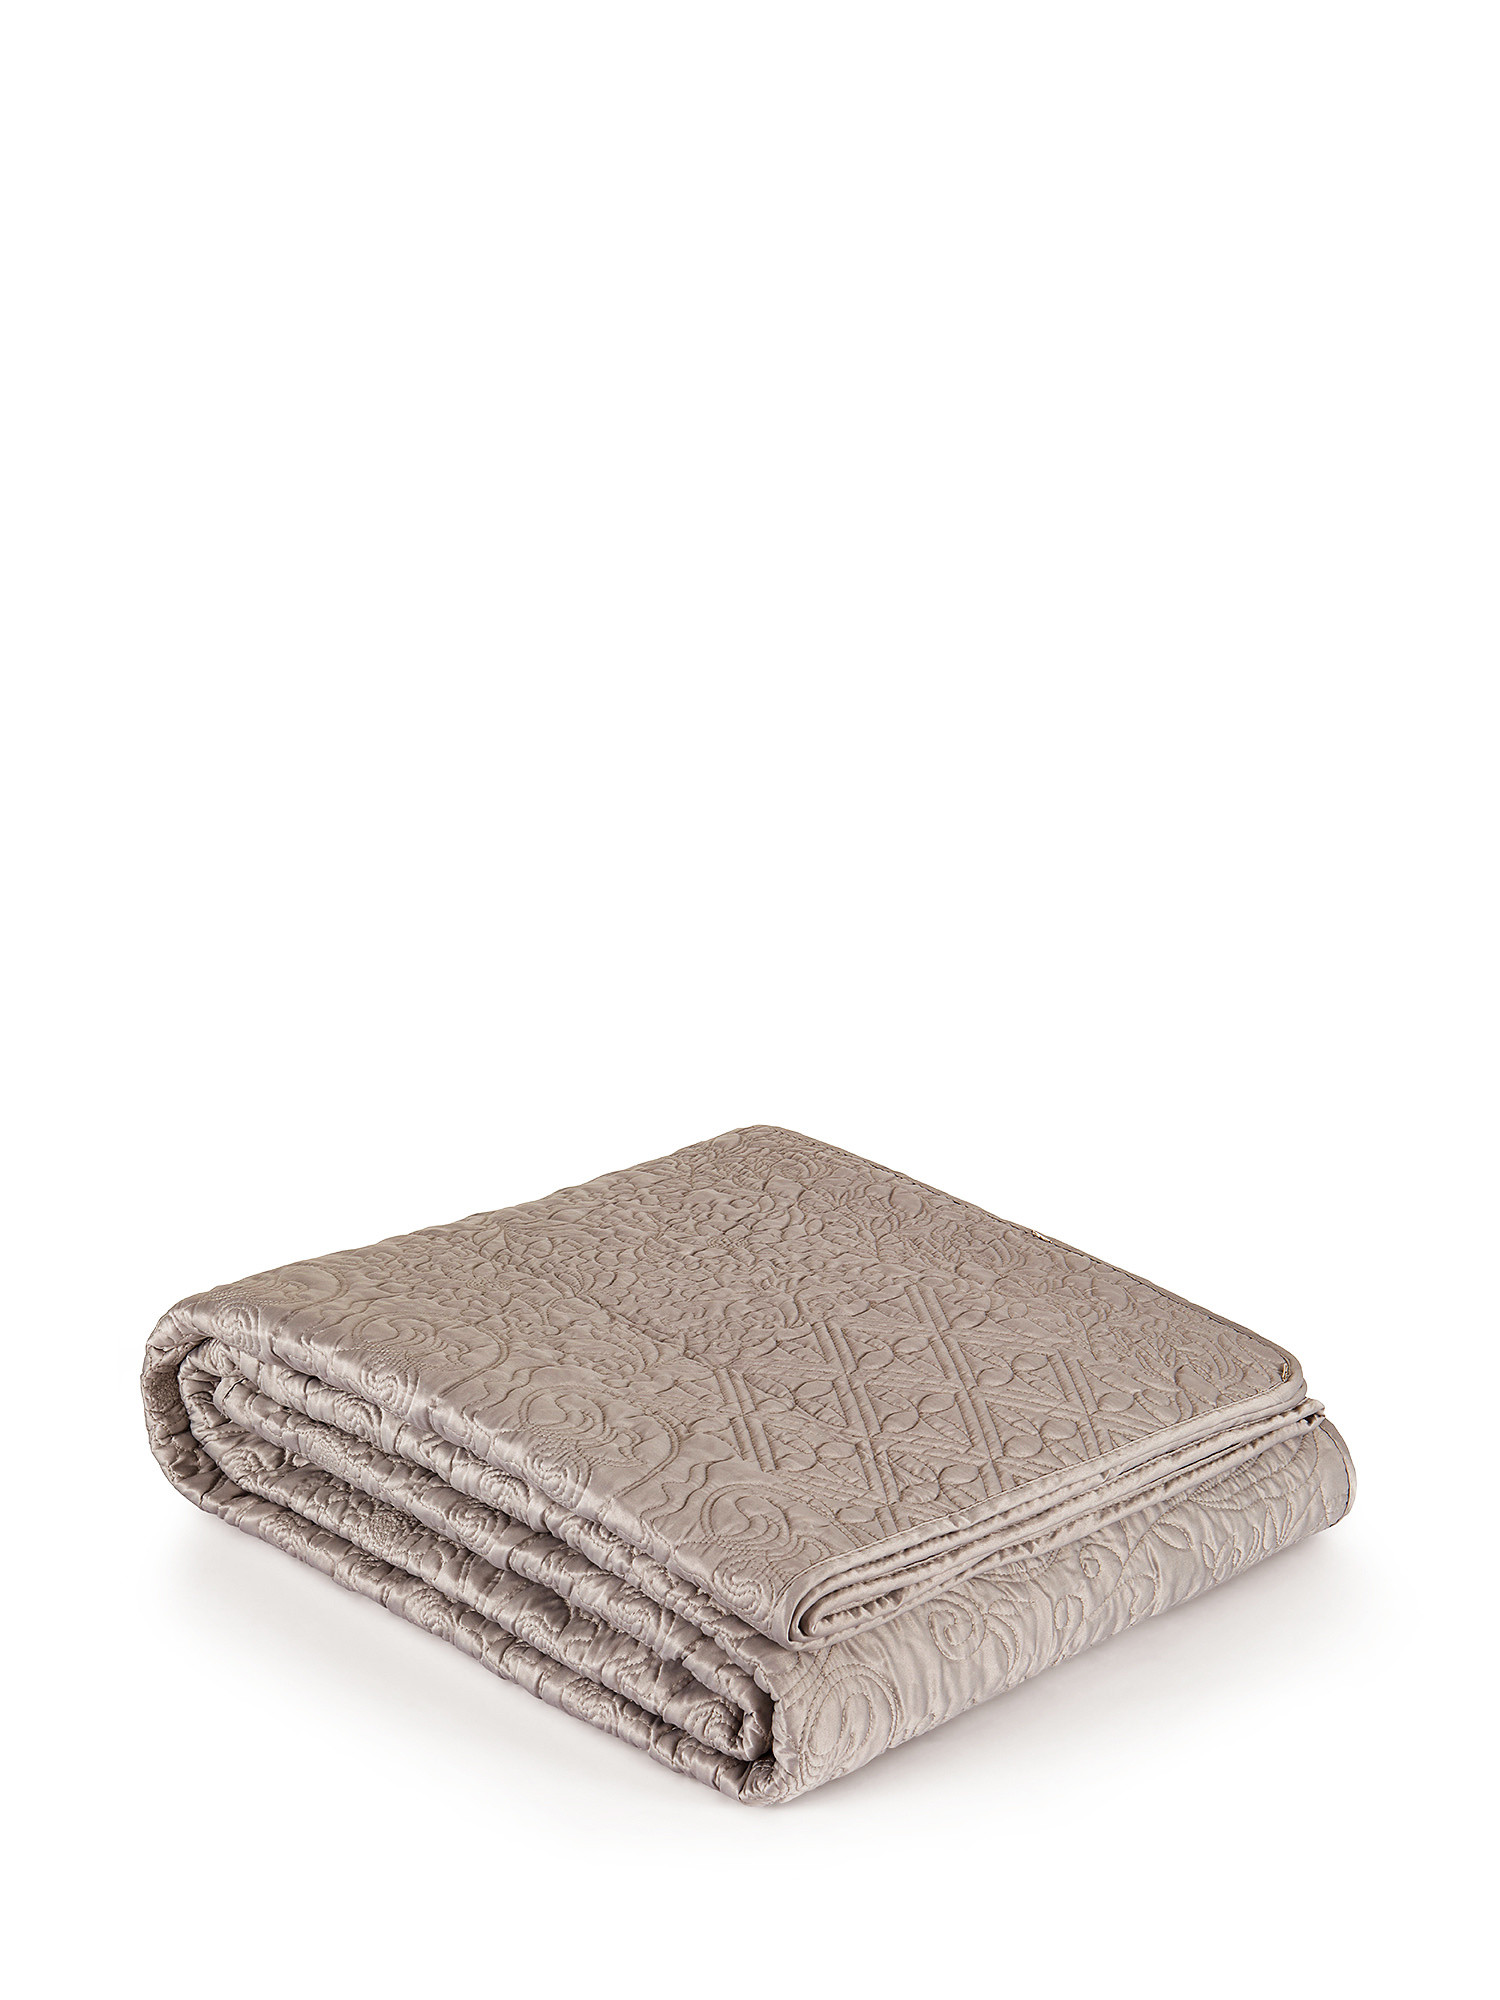 Portofino Boutis quilted bedspread, Beige, large image number 0